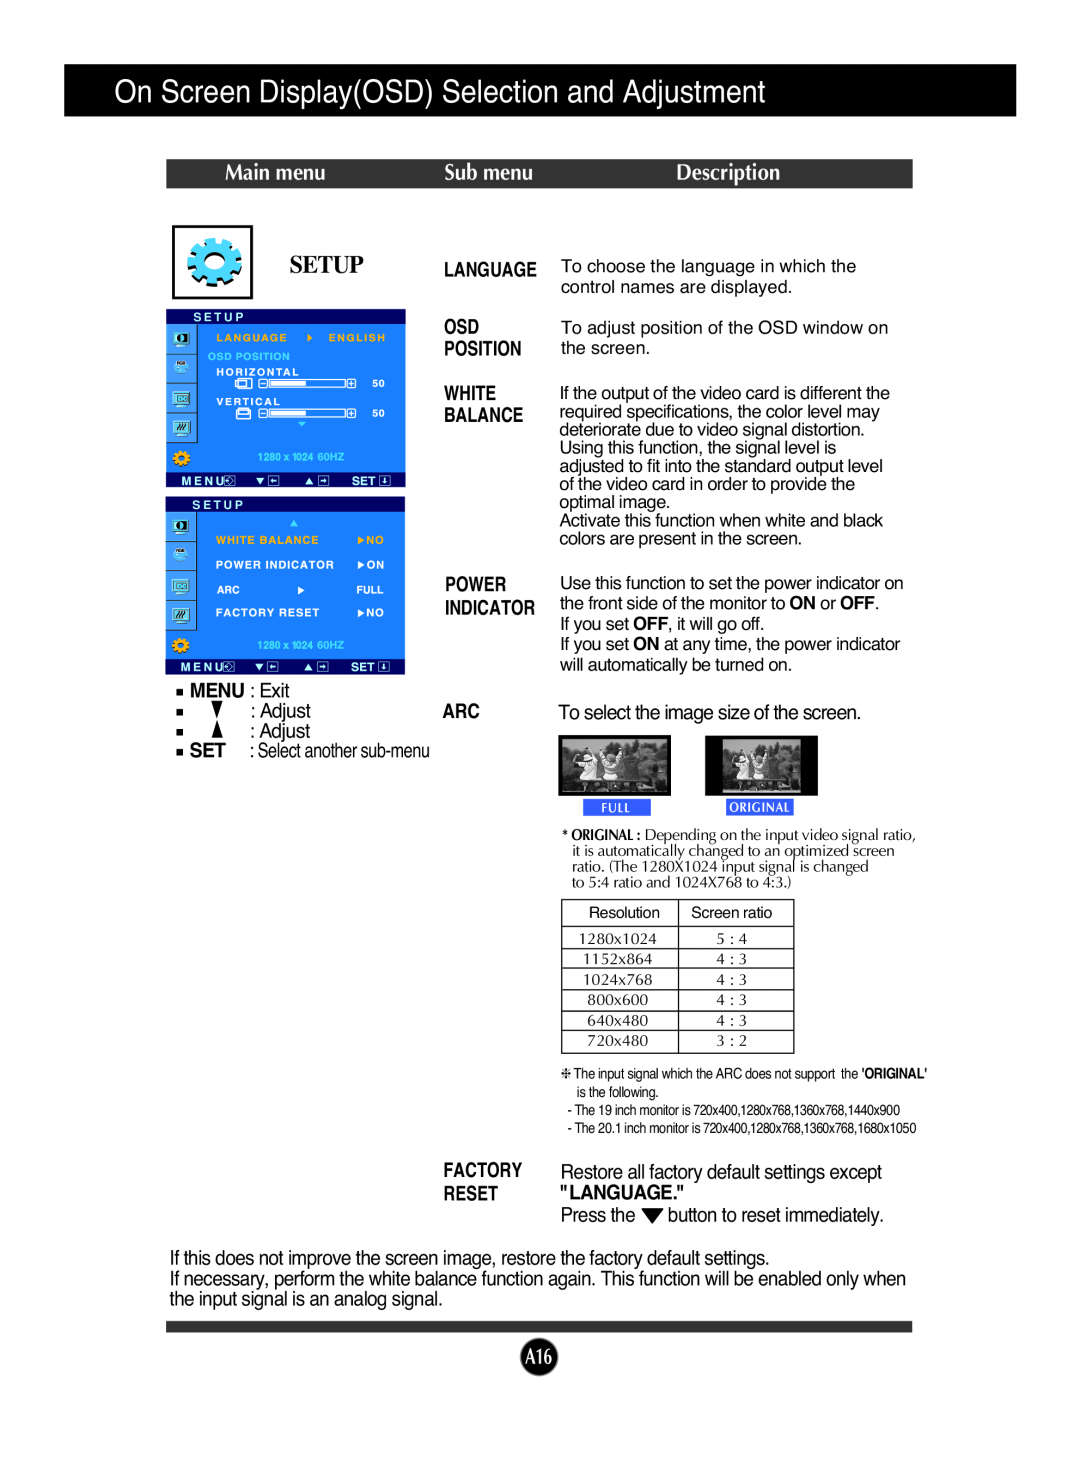 LG Electronics L204WS On Screen DisplayOSD Selection and Adjustment, Main menu, Description, Setup Language, Sub menu 